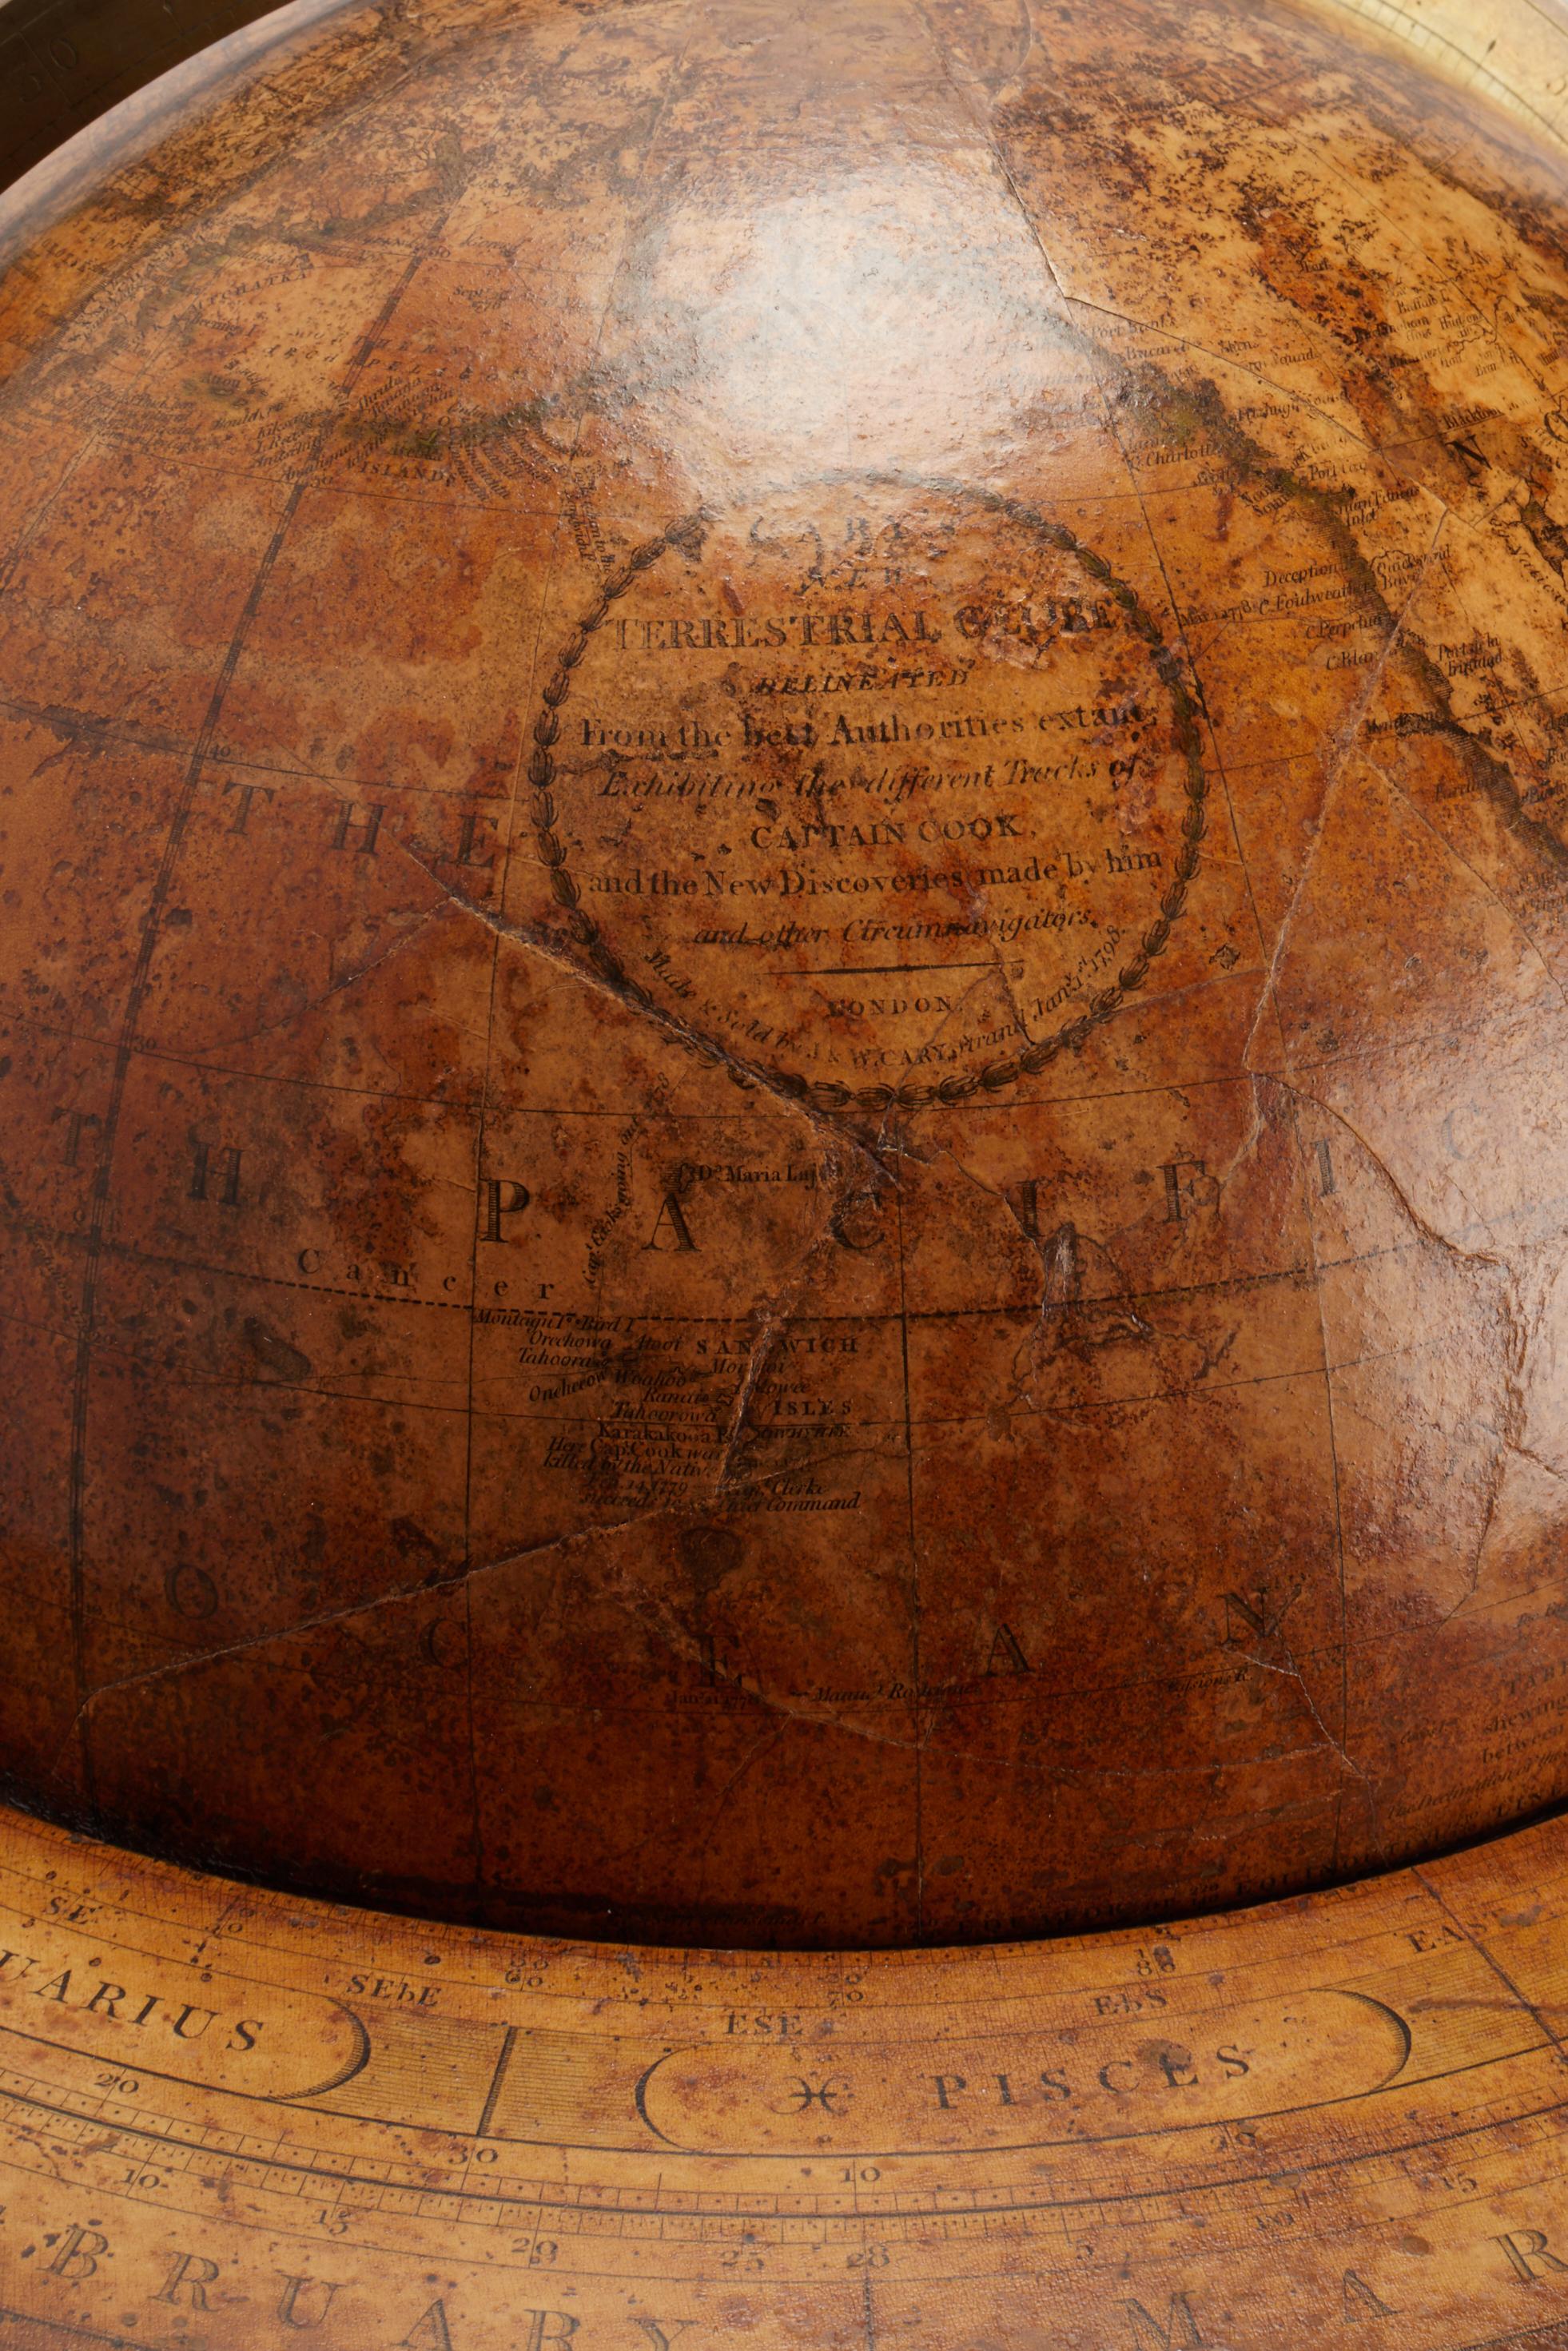 Large 'Papier Machè' terrestrial globe (12